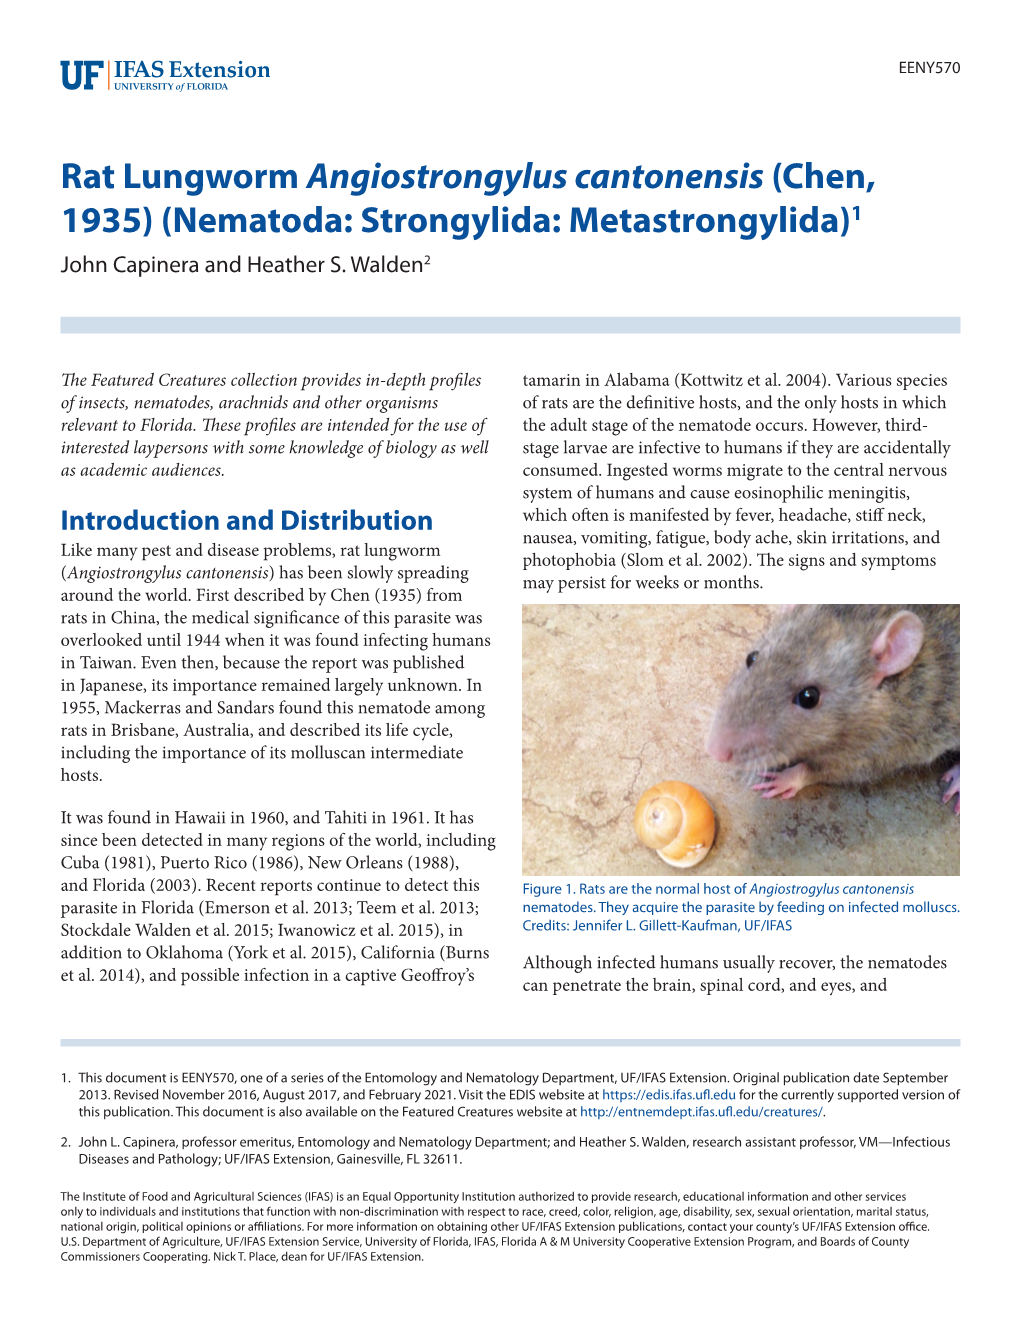 Rat Lungworm Angiostrongylus Cantonensis (Chen, 1935) (Nematoda: Strongylida: Metastrongylida)1 John Capinera and Heather S